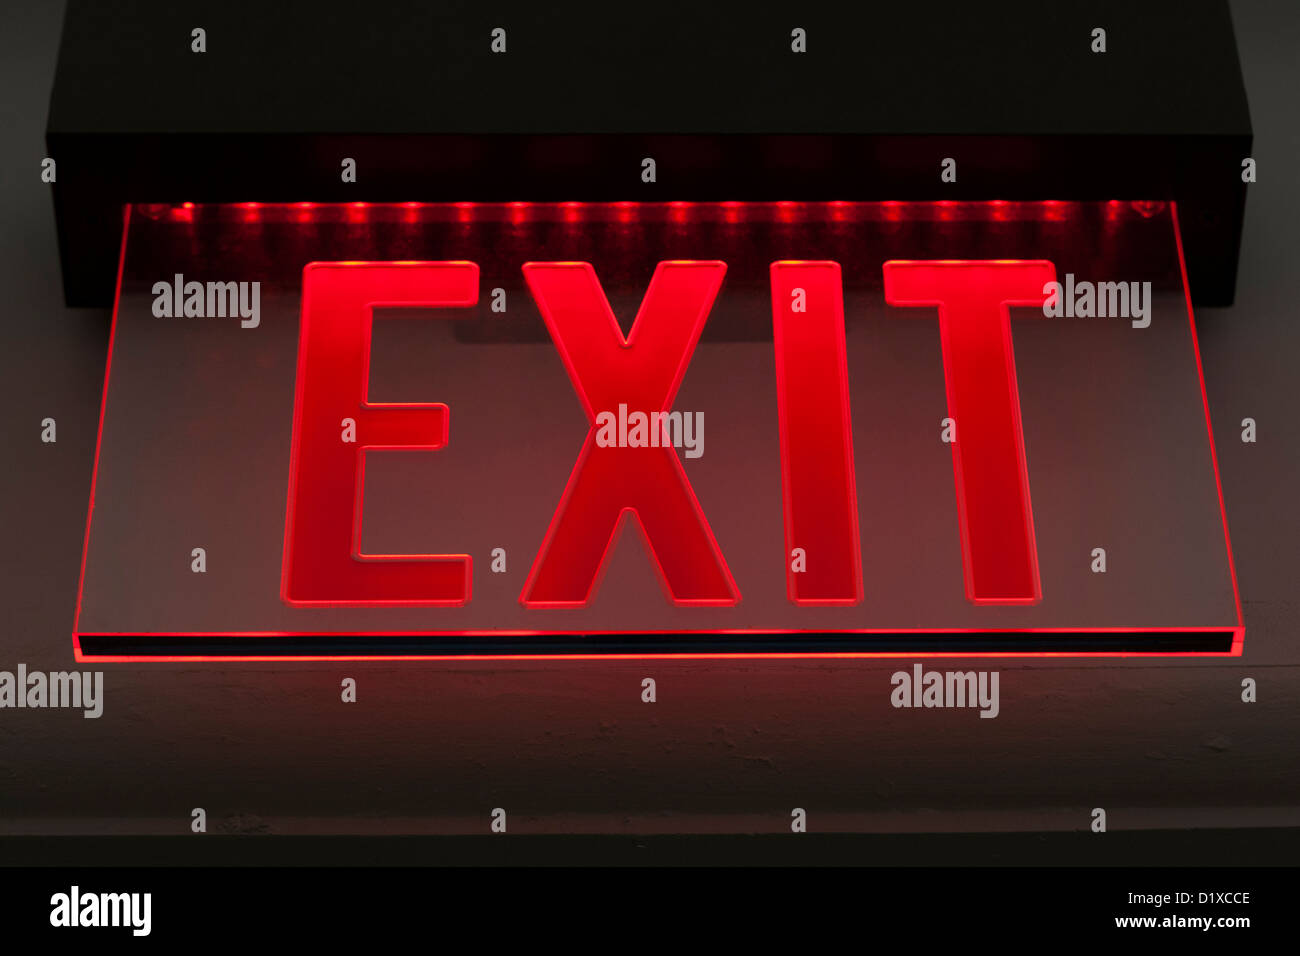 Red illuminated exit sign Stock Photo